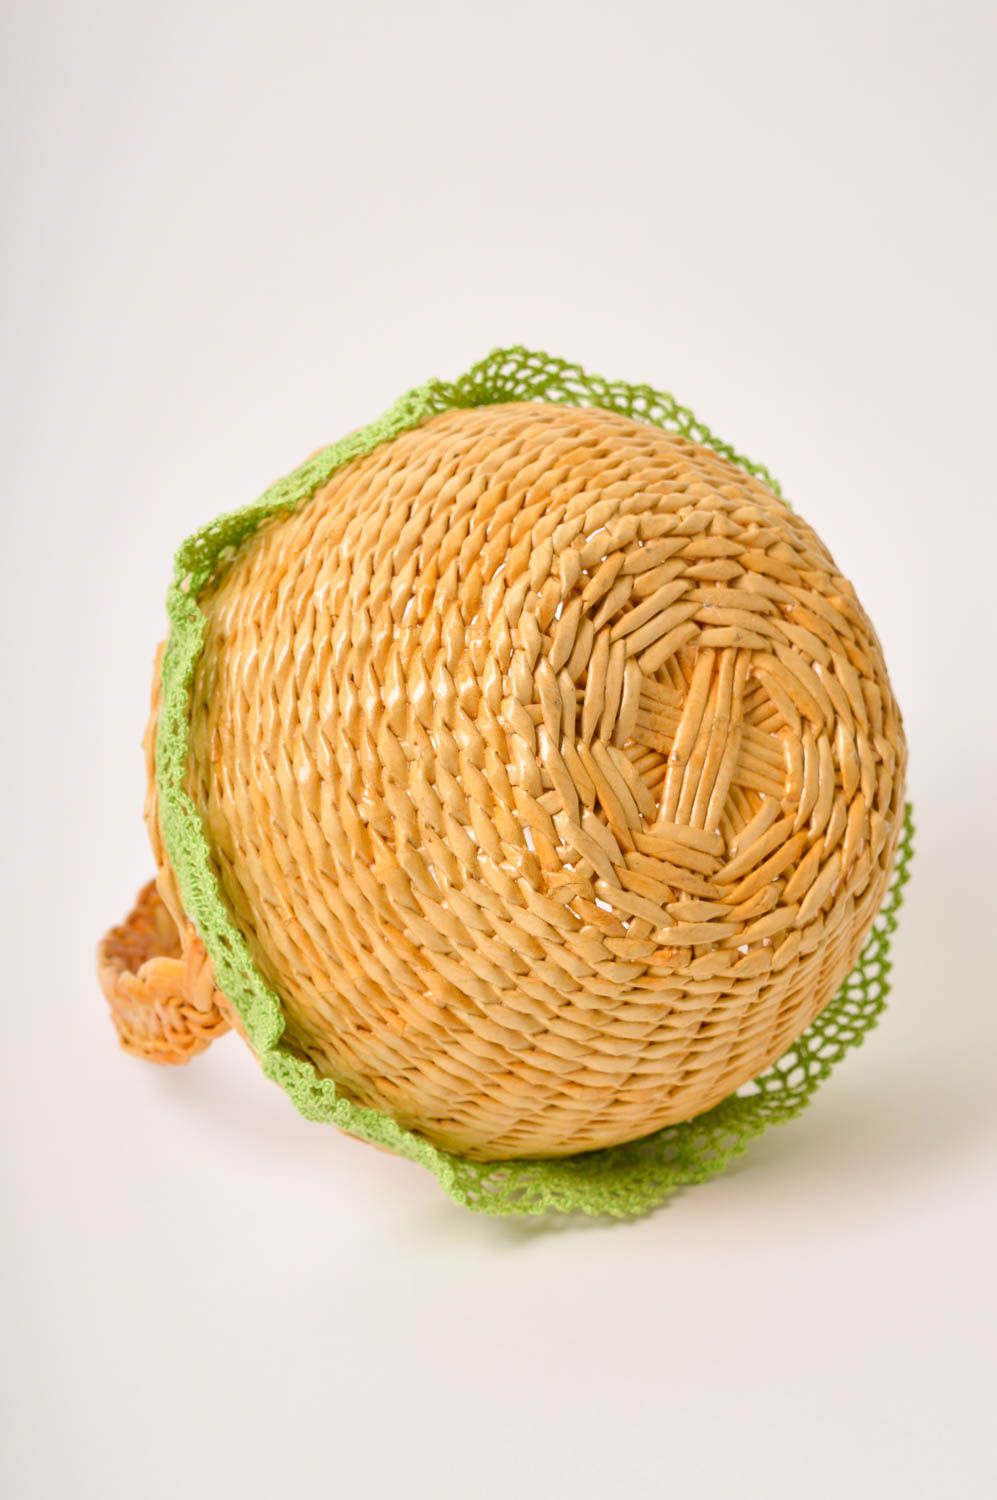 Handmade wicker basket home decor stylish accessories home organizer ideas photo 4